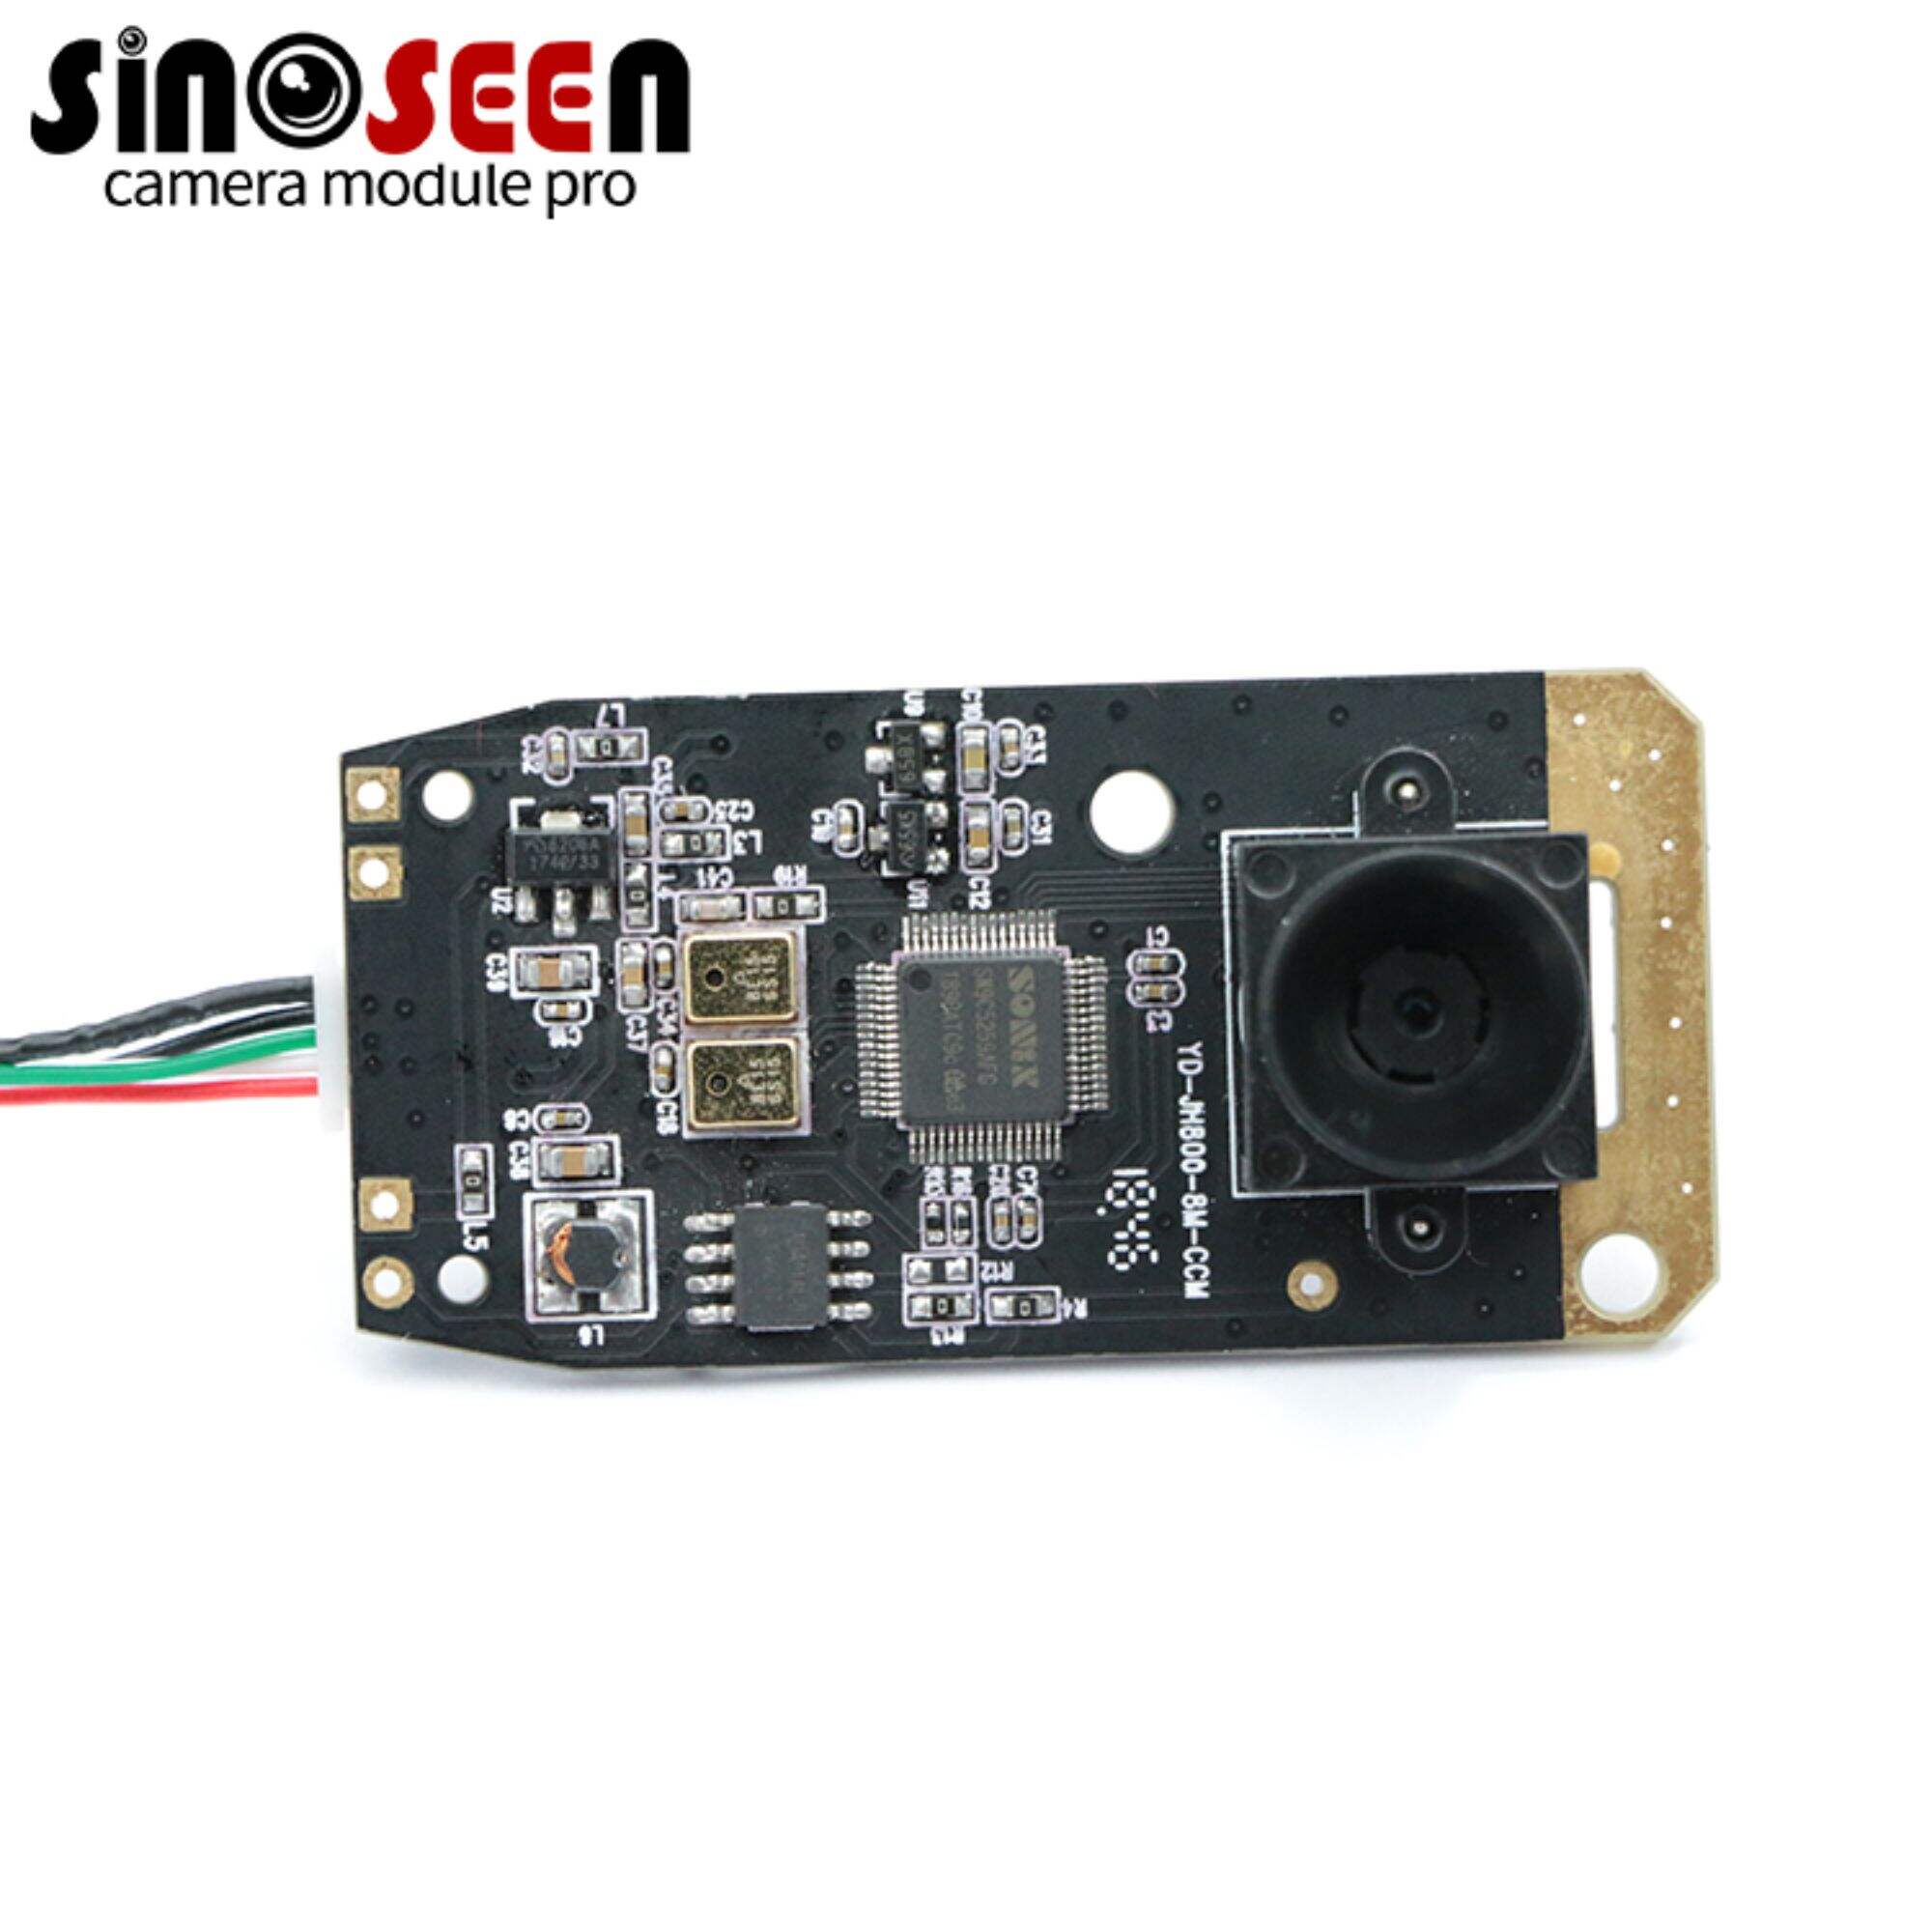 Fixed Focus USB Global Shutter Camera Module with Omnivision OV9281 Sensor 120FPS